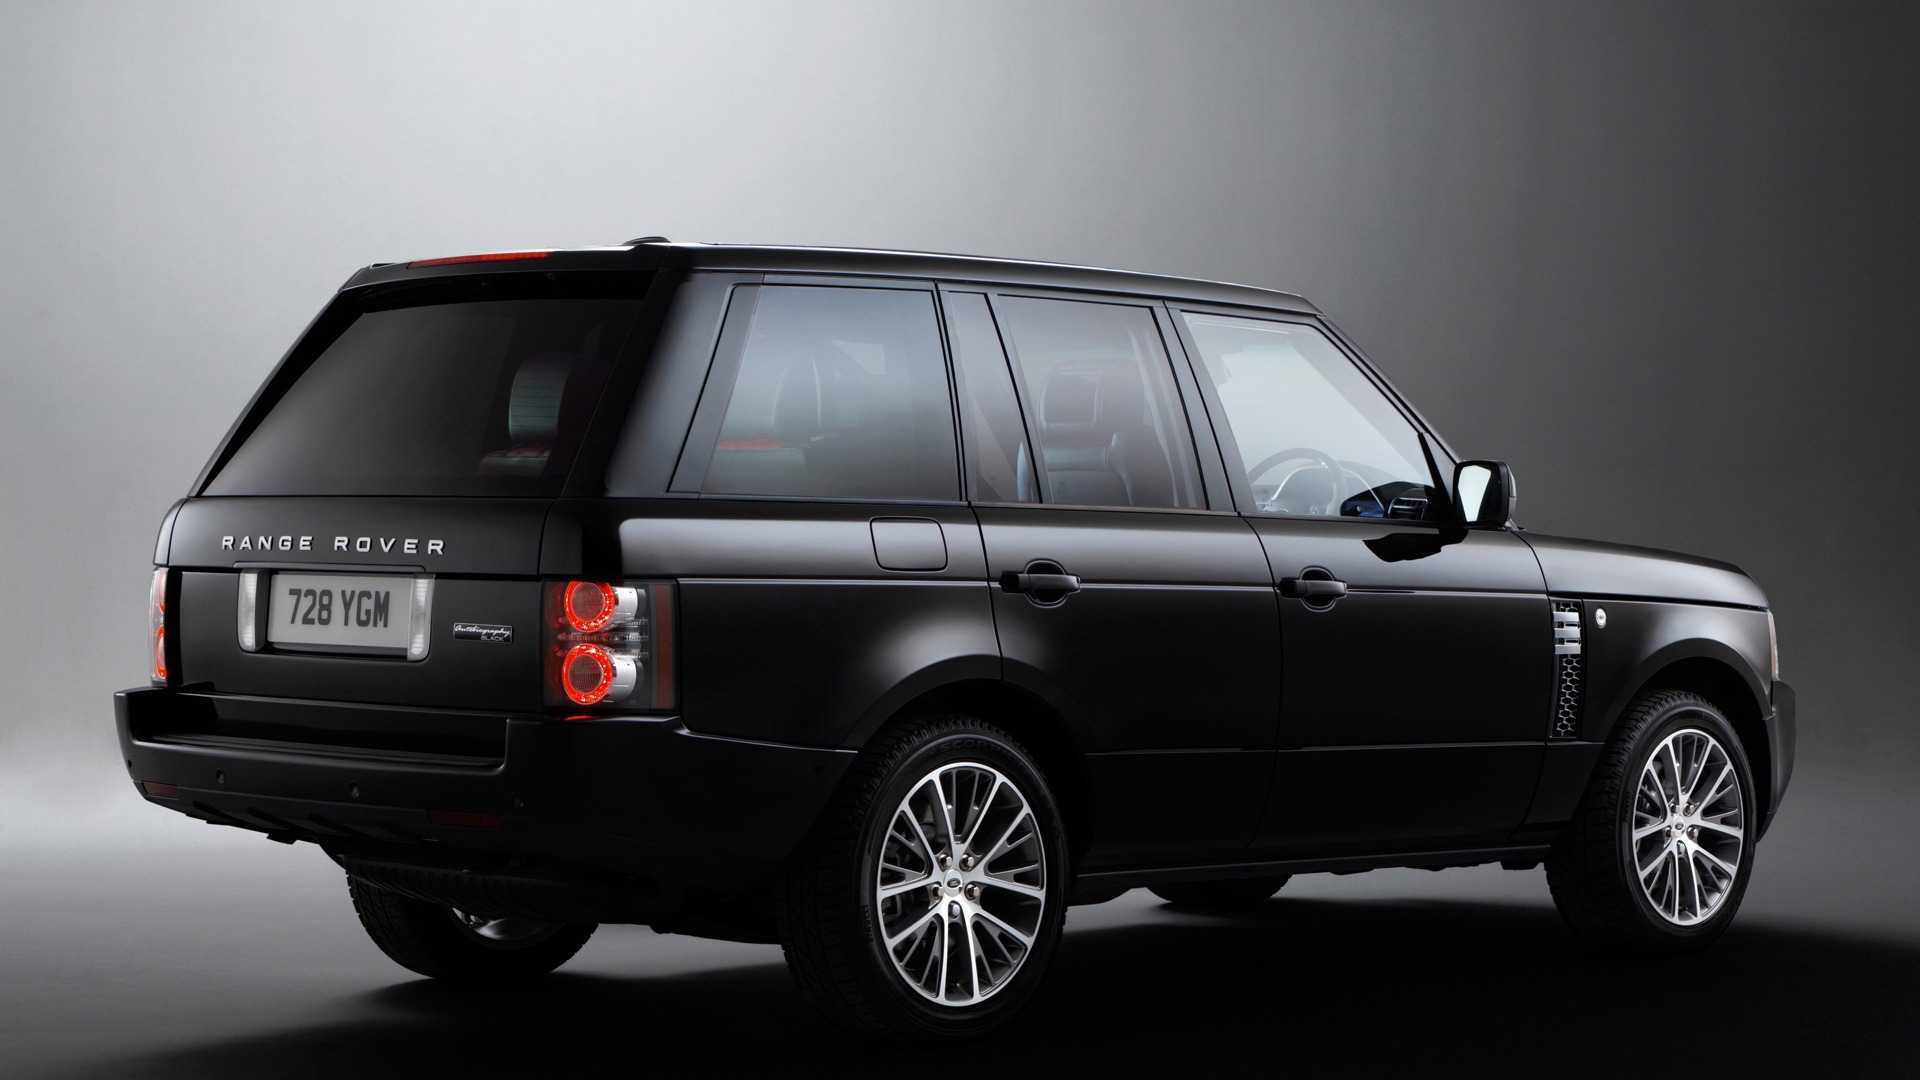 Land Rover Range Rover Black Edition - 2011 路虎19 - 1920x1080